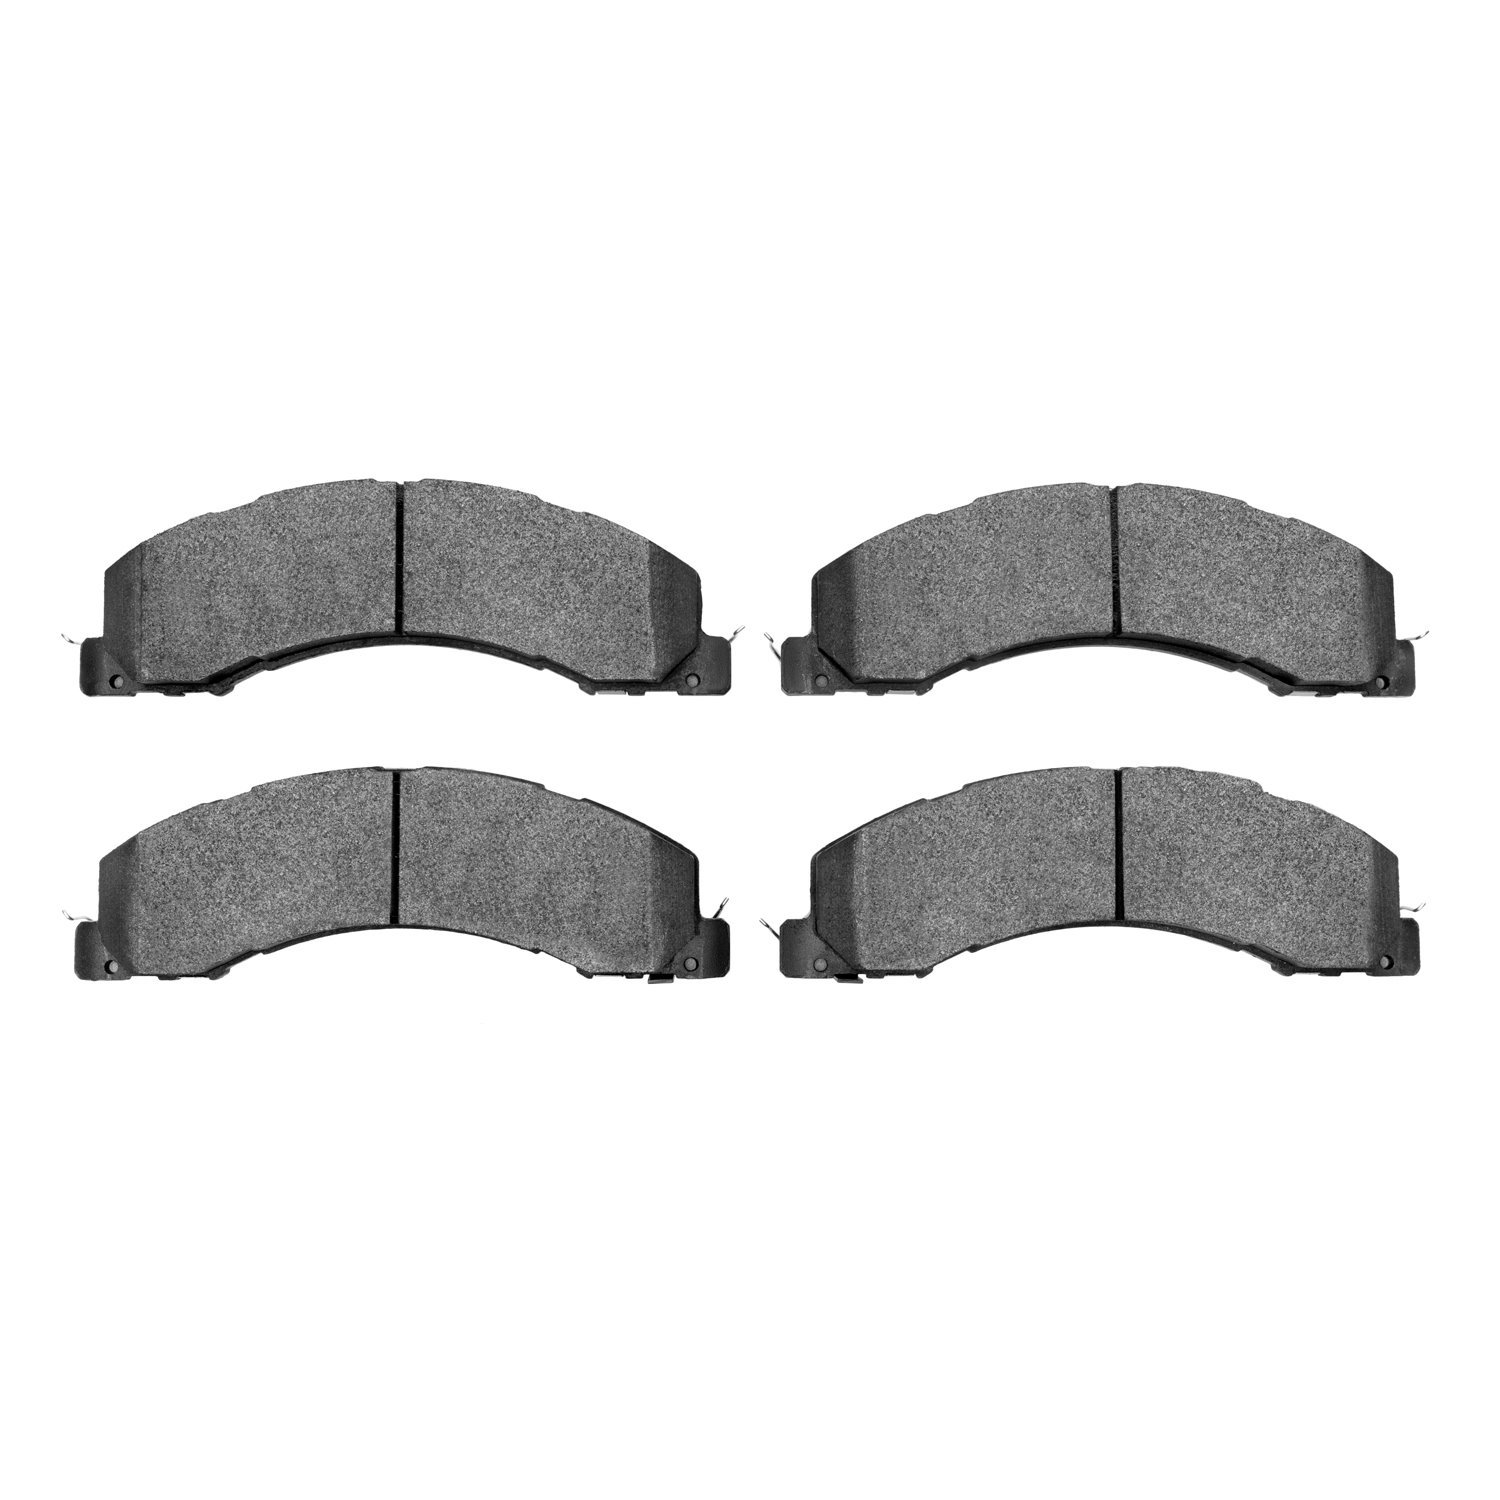 1214-1335-00 Heavy-Duty Semi-Metallic Brake Pads, Fits Select Multiple Makes/Models, Position: Rear,Front,Fr & Rr